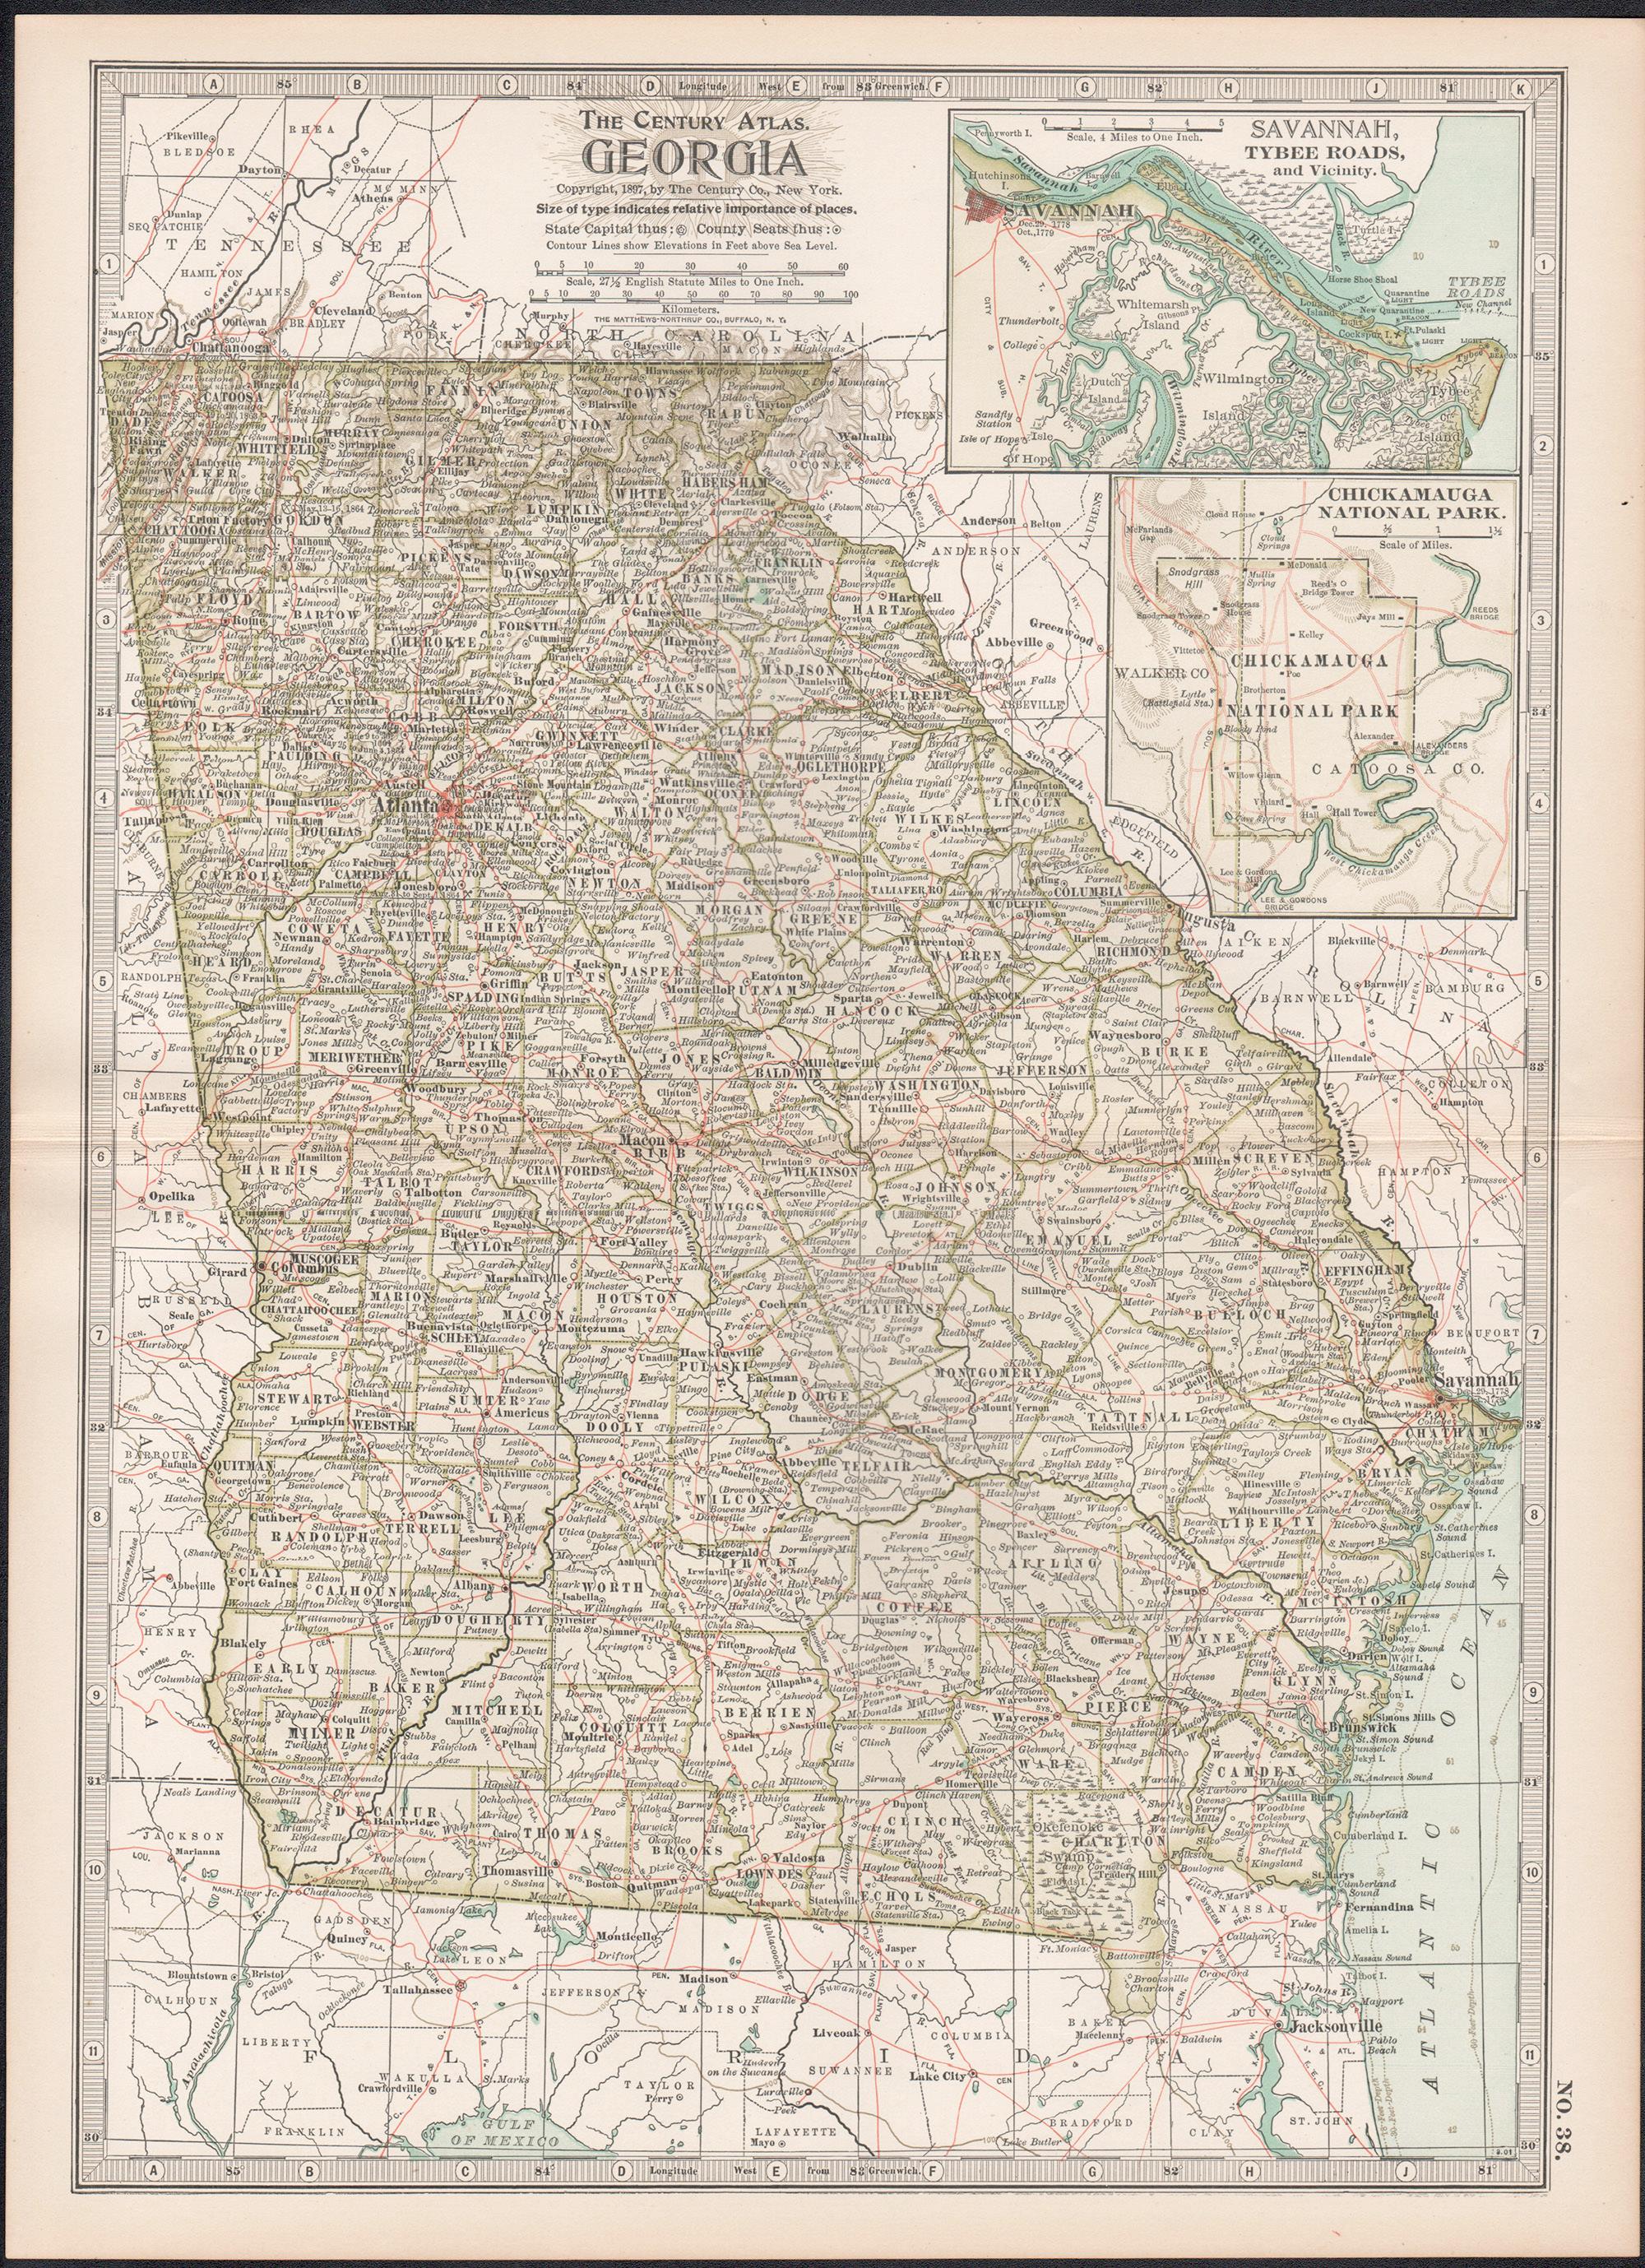 Georgia. USA Century Atlas state antique vintage map - Print by Unknown